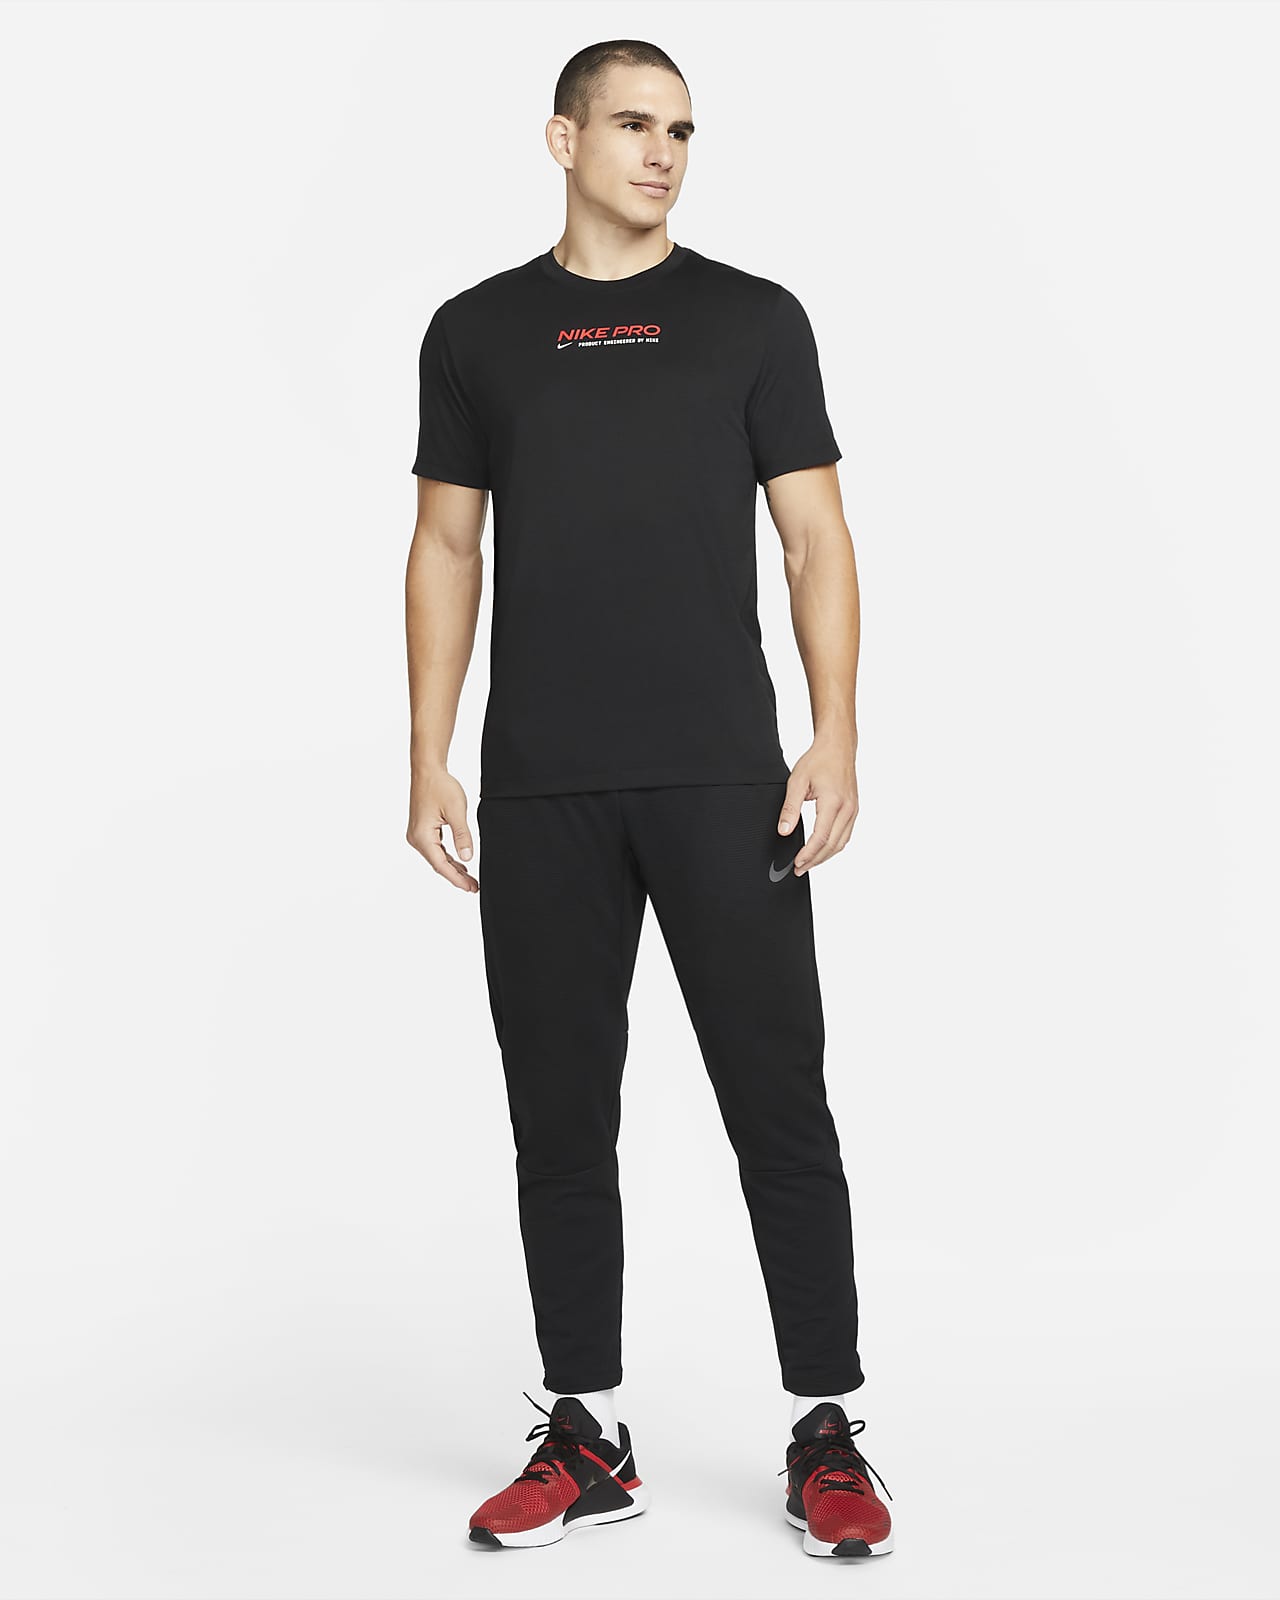 esta noche Hectáreas Recomendado Nike Pro Dri-FIT Men's Training T-Shirt. Nike.com